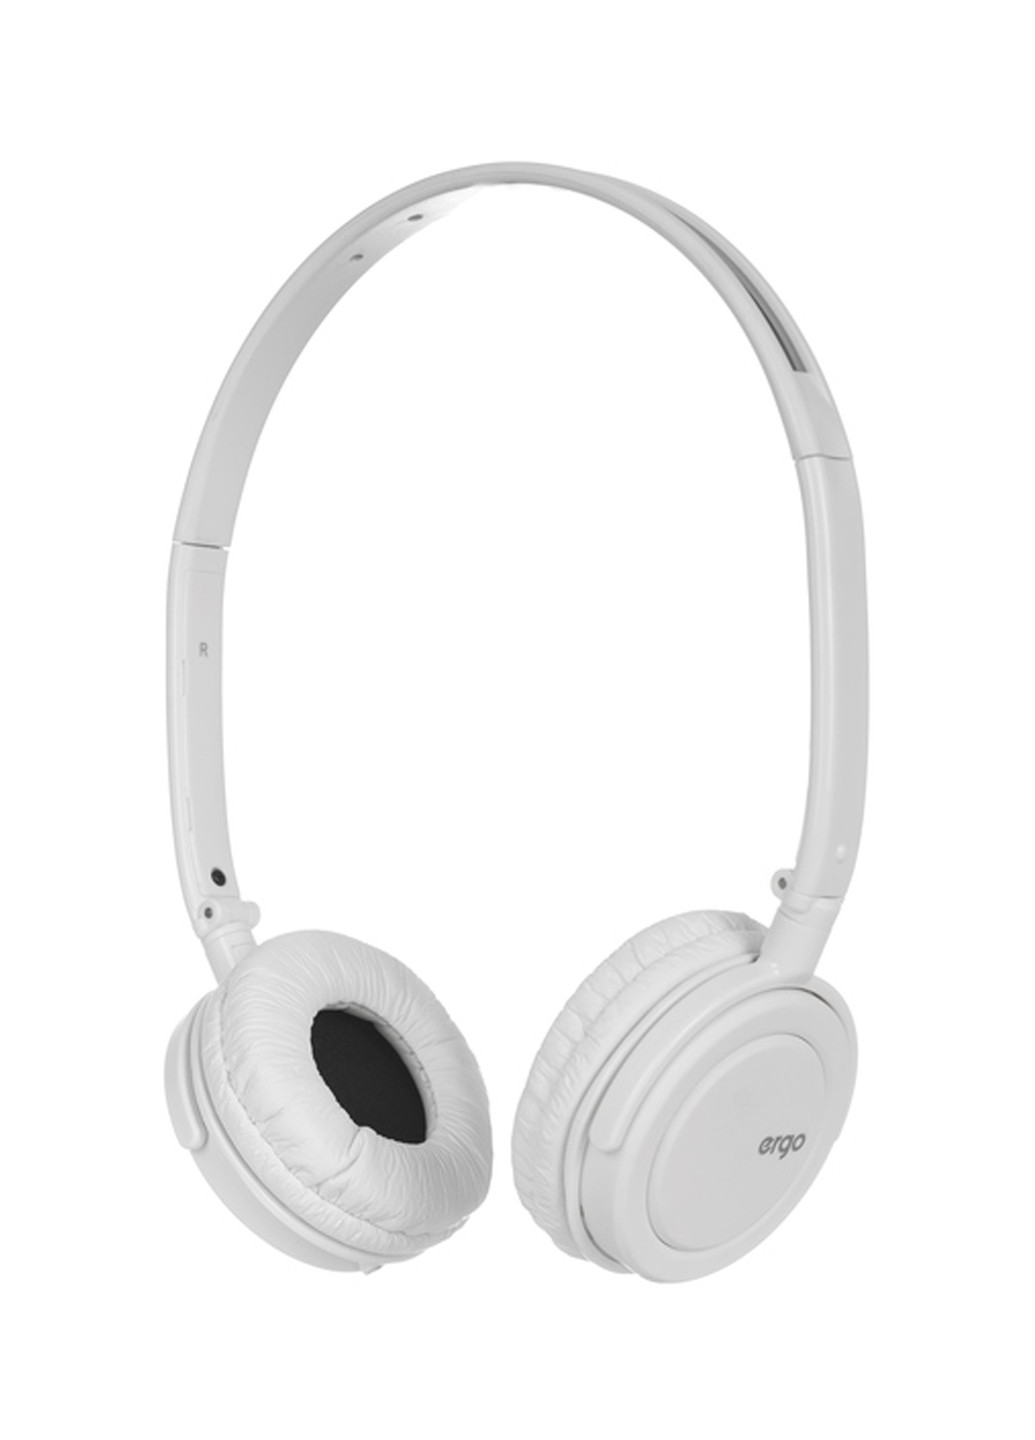 Навушники VM-330 Білий Ergo vm-330 белый (135029176)